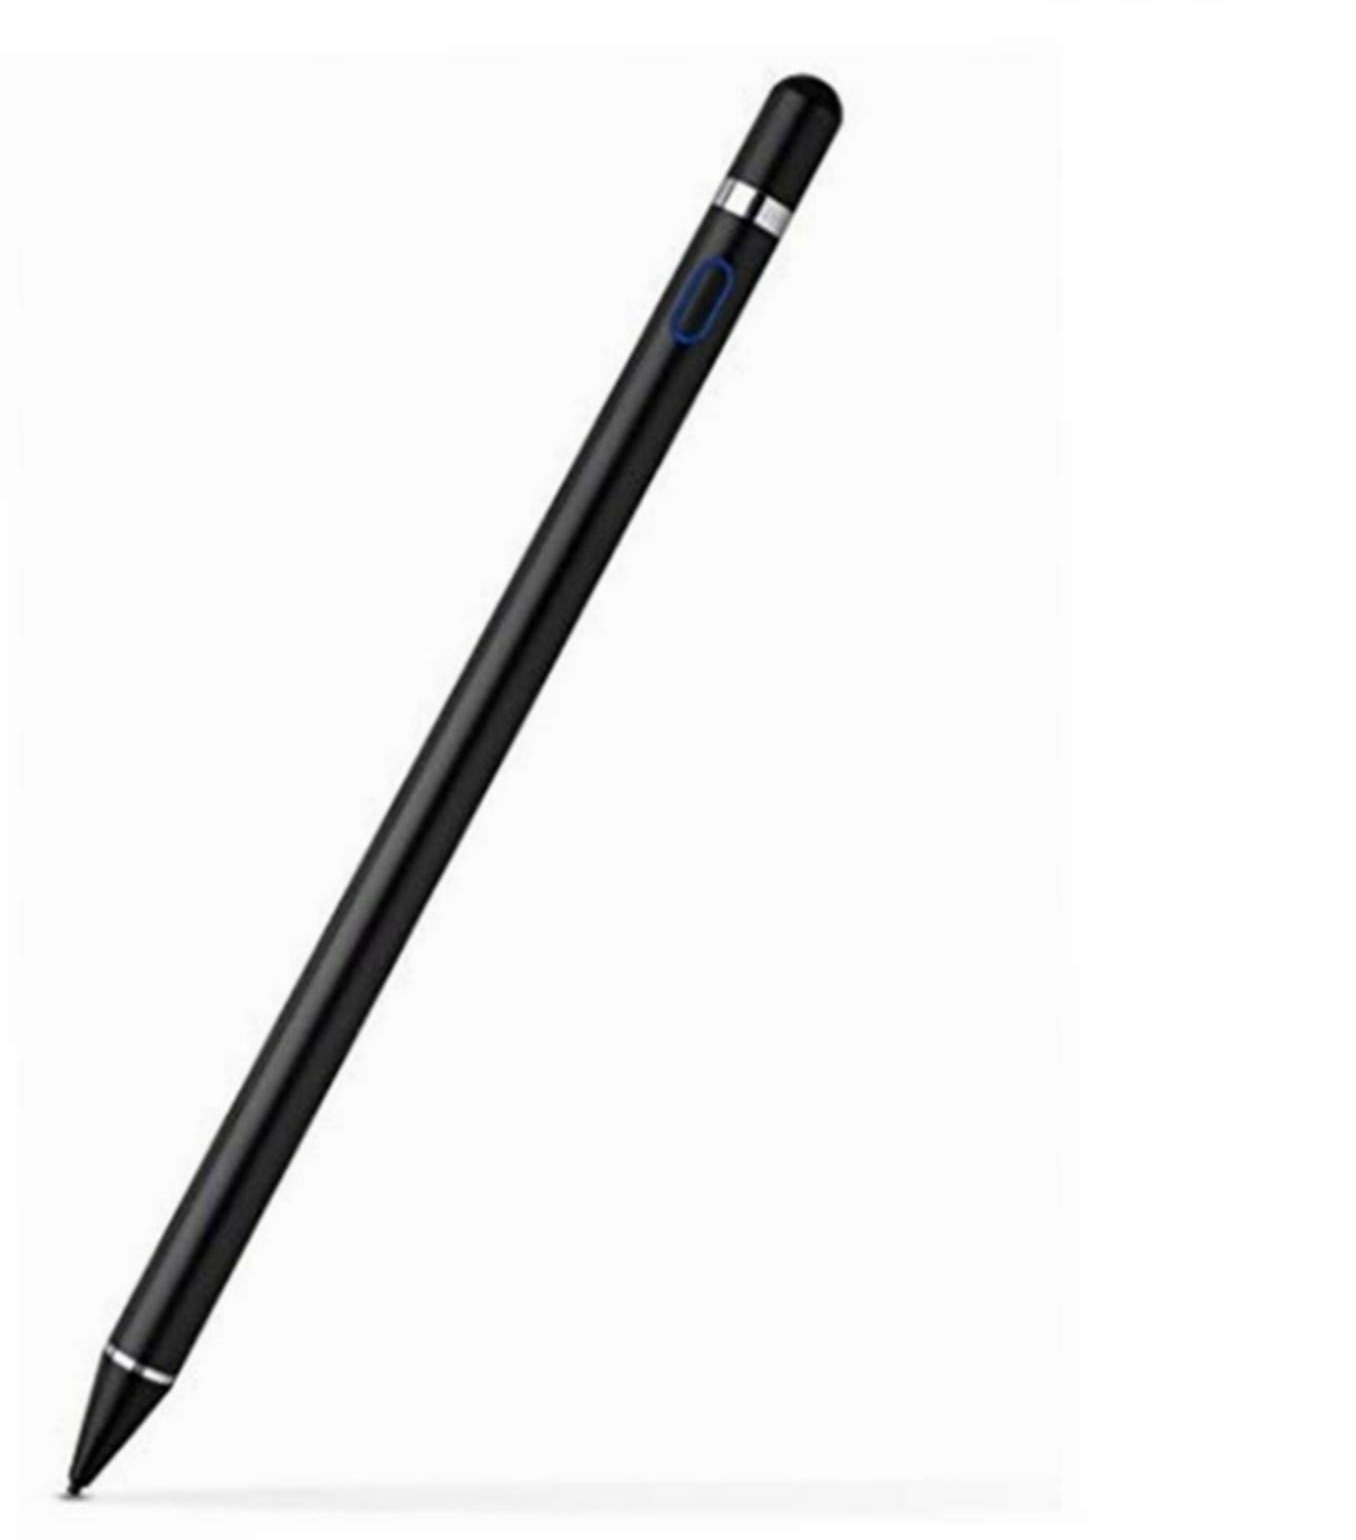 Stylus kapazitiver Stift aktiver Touch Stift für Lenovo Tab 2 3 4 8 10 Plus Pro M10 P10 P11 P8 E7 E8 E10 Yoga Book 10.1' Tablet elektromagnetische Touch Screen Active Pen 4096 Pression (Black)